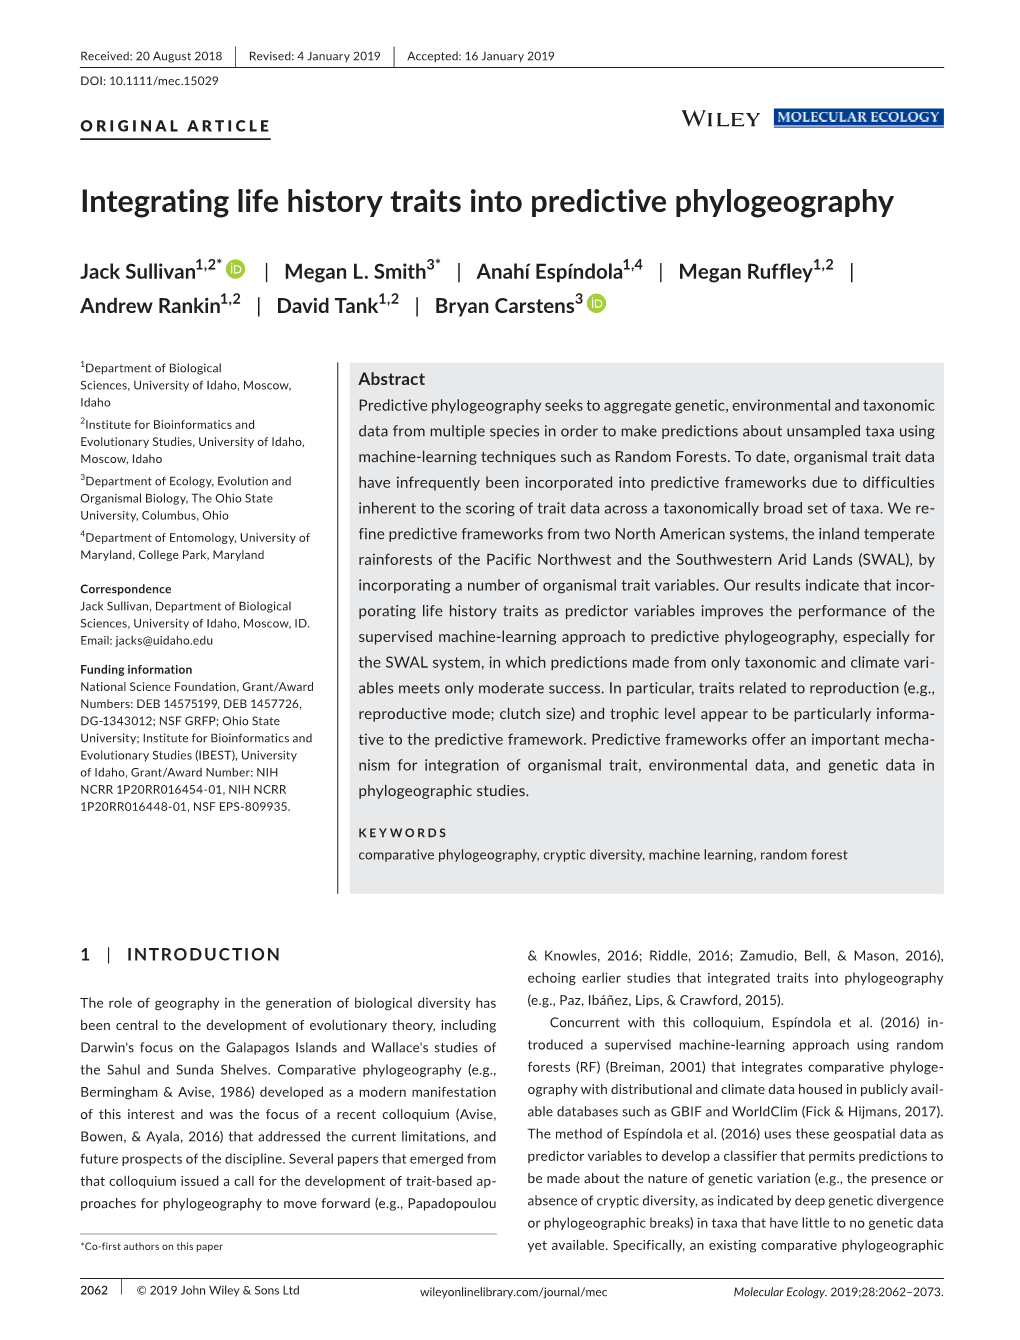 Integrating Life History Traits Into Predictive Phylogeography